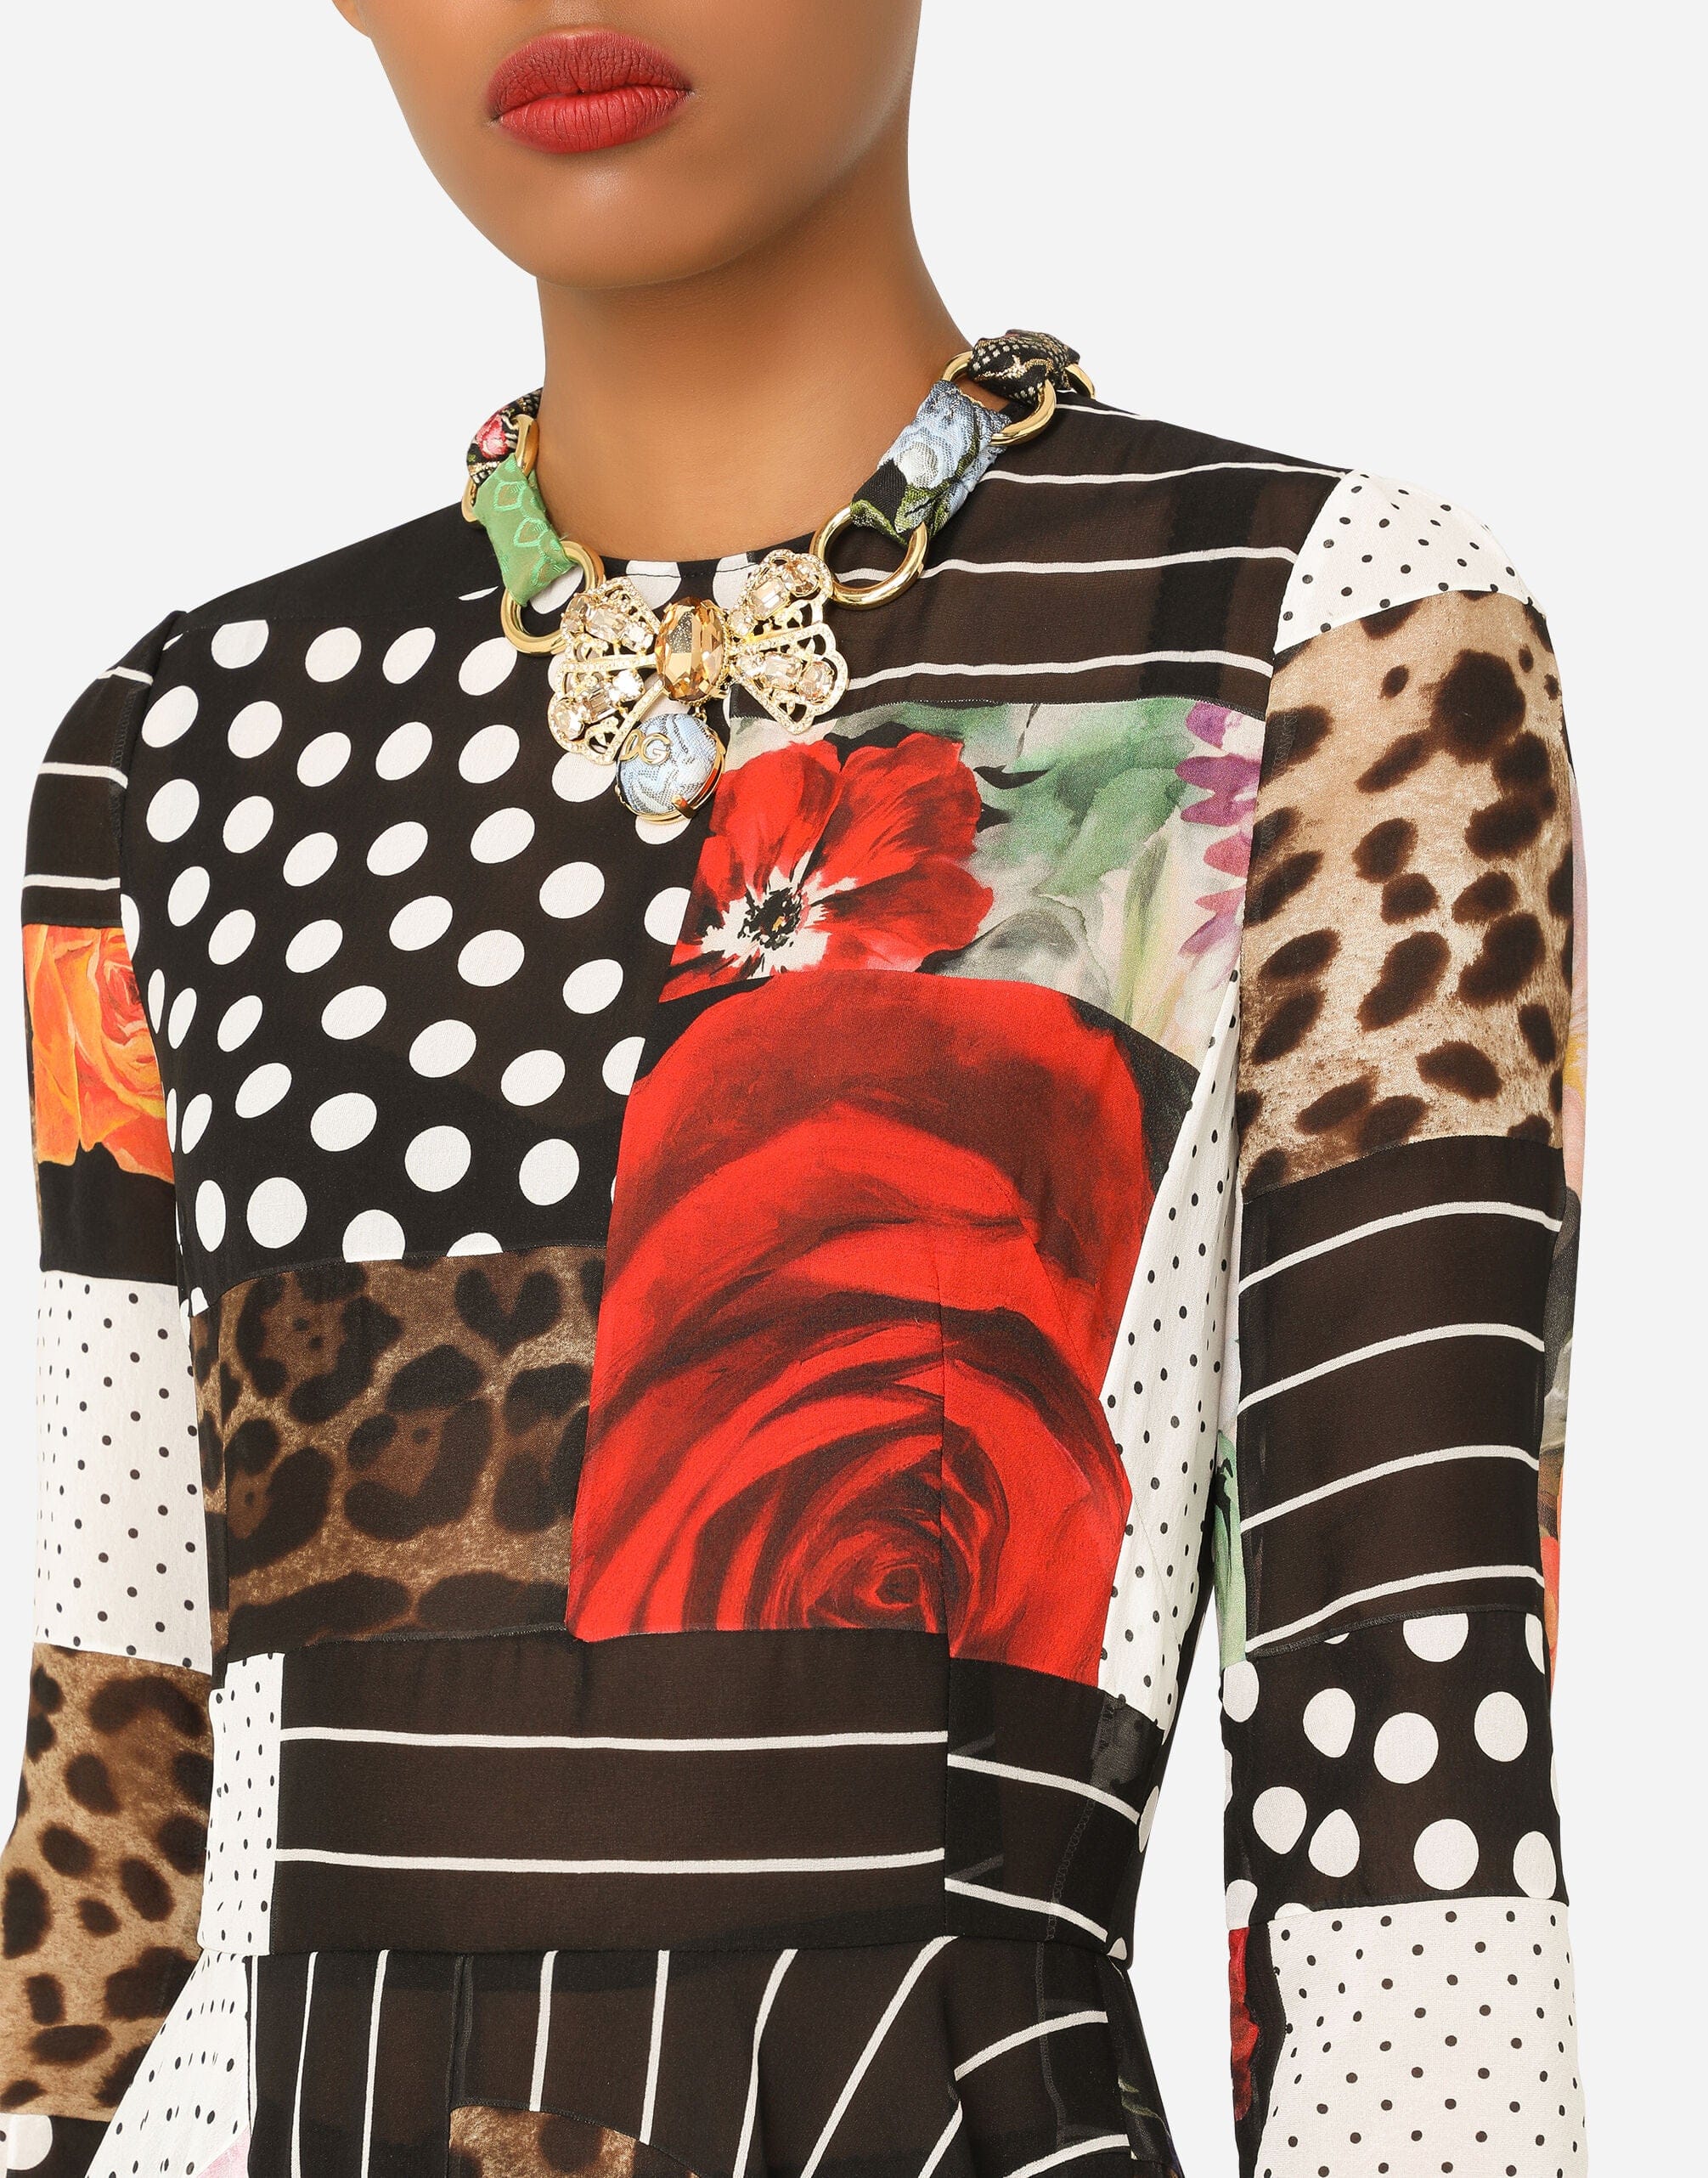 Dolce & Gabbana Multicolor Patchwork Floral Leopard Dress